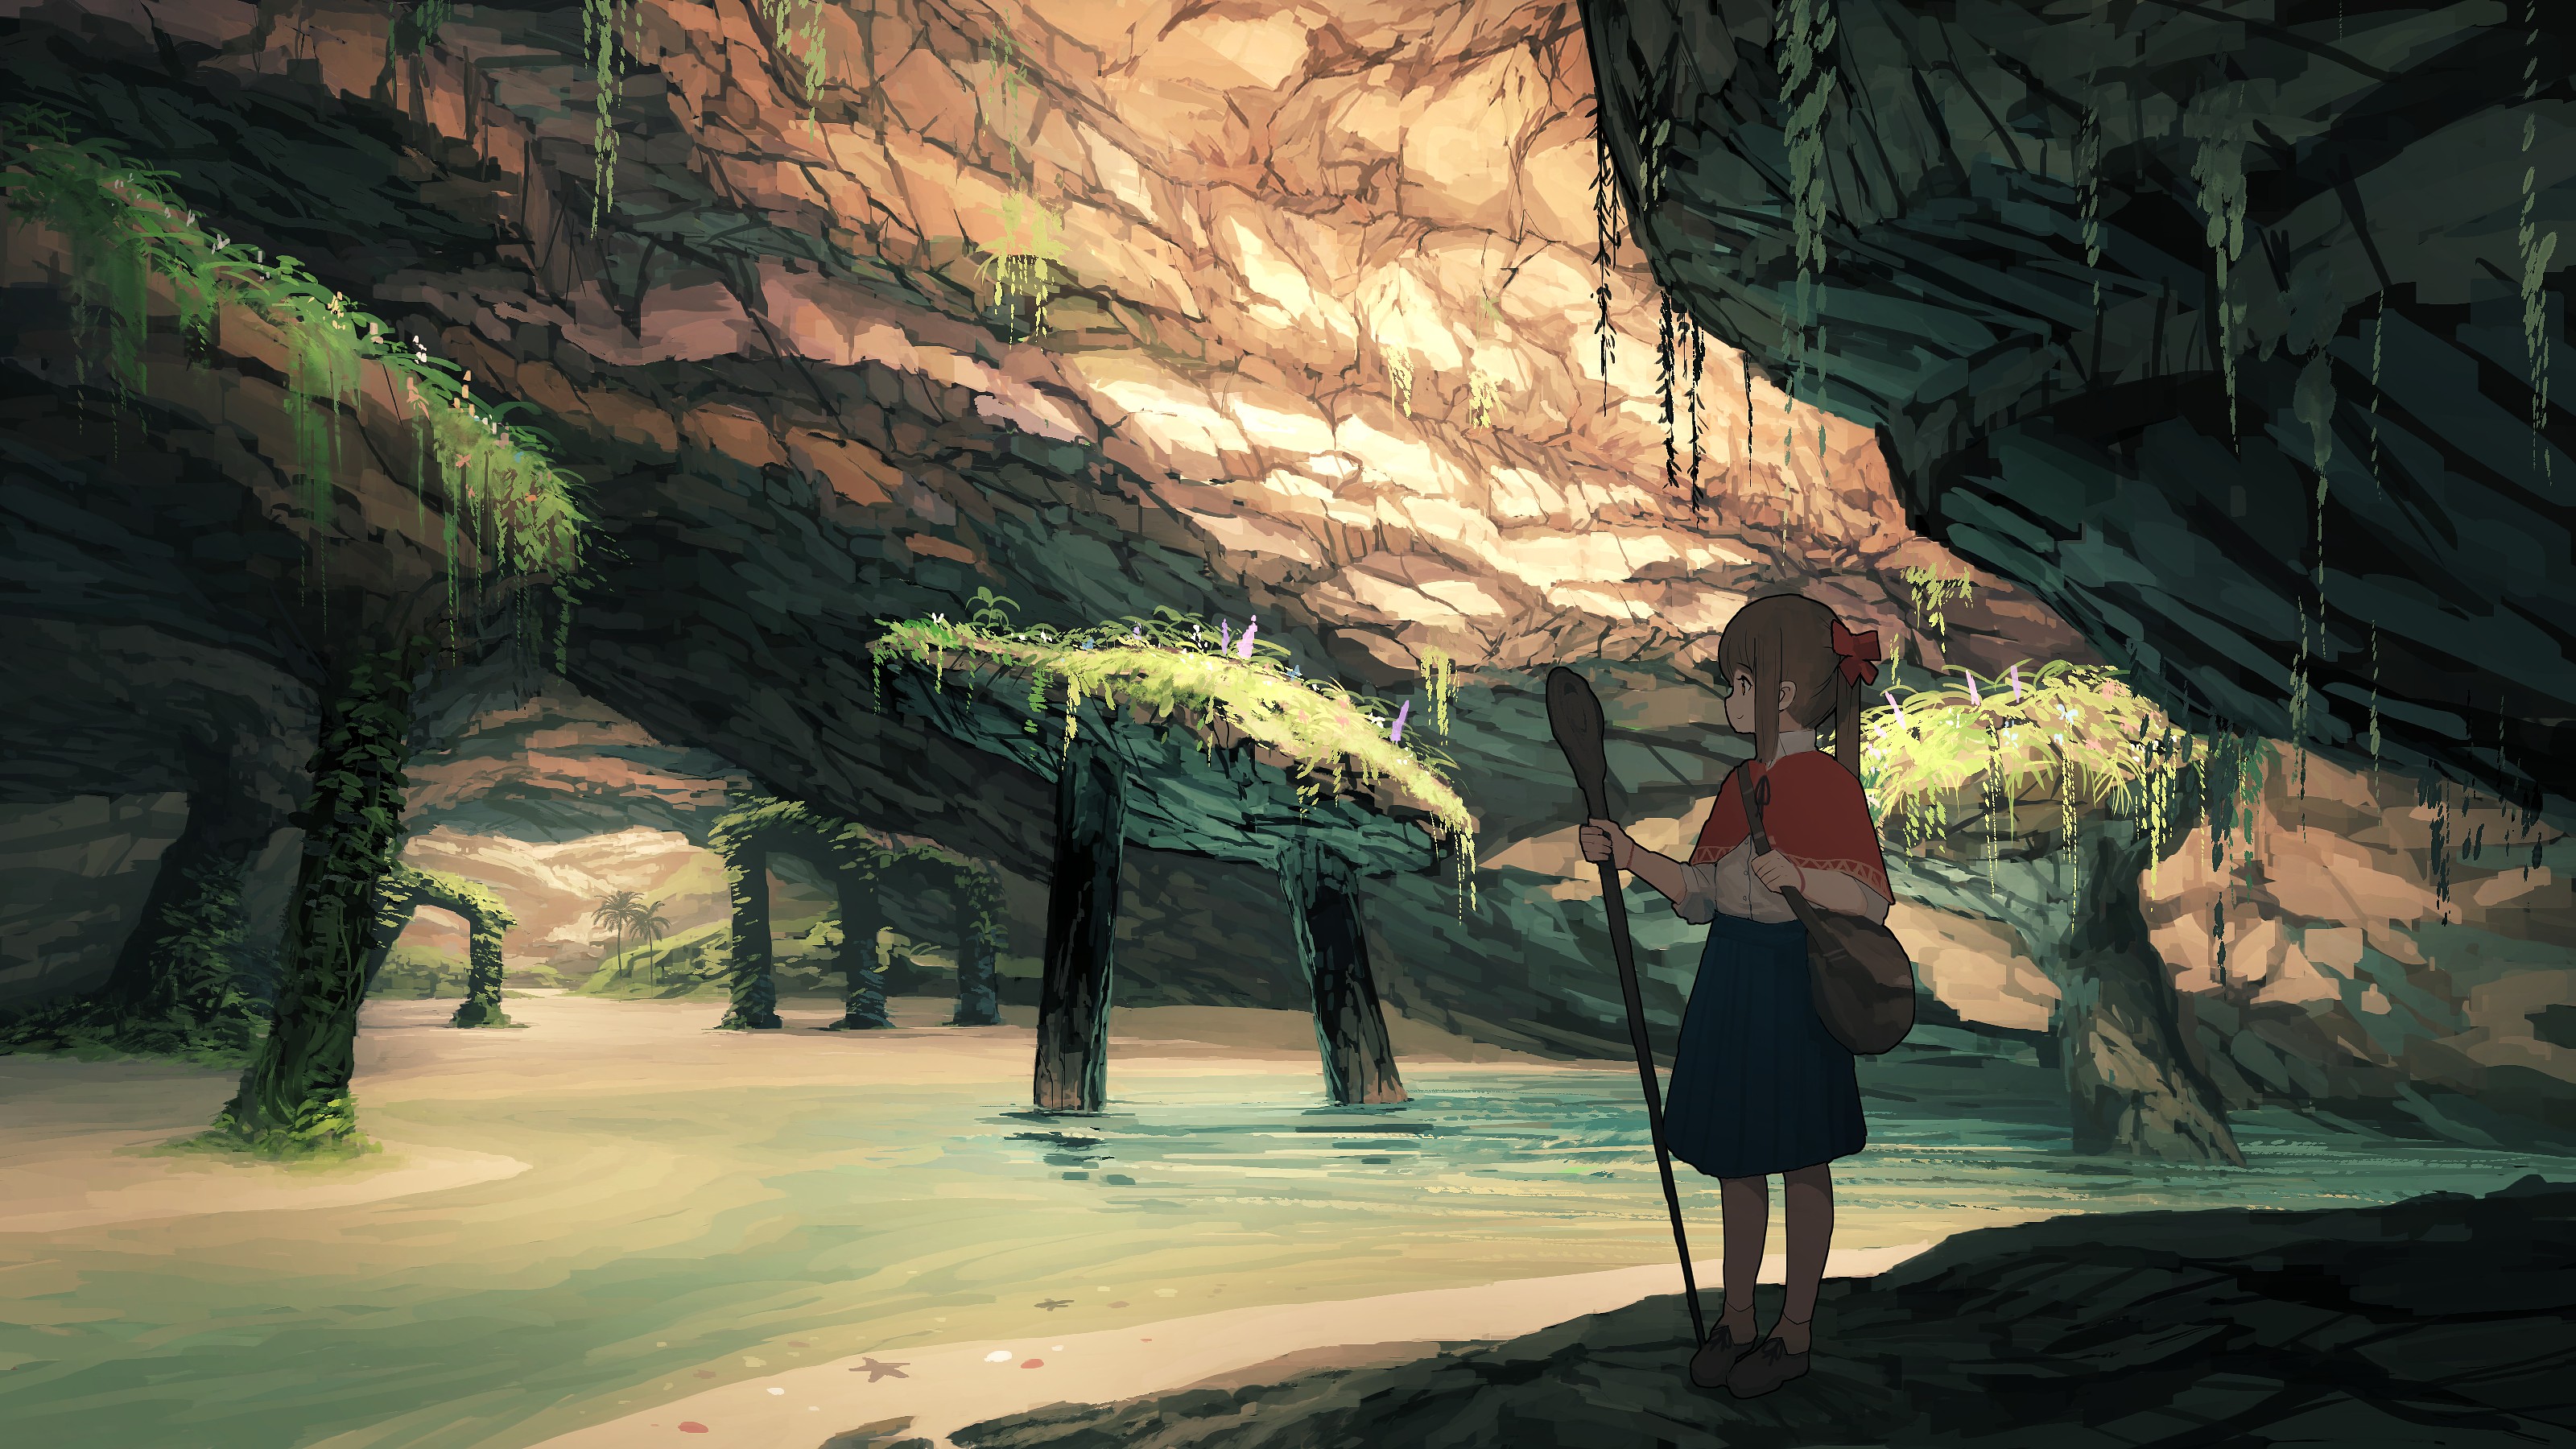 Anime 3200x1800 nature underground cave anime anime girls staff women outdoors standing water rocks